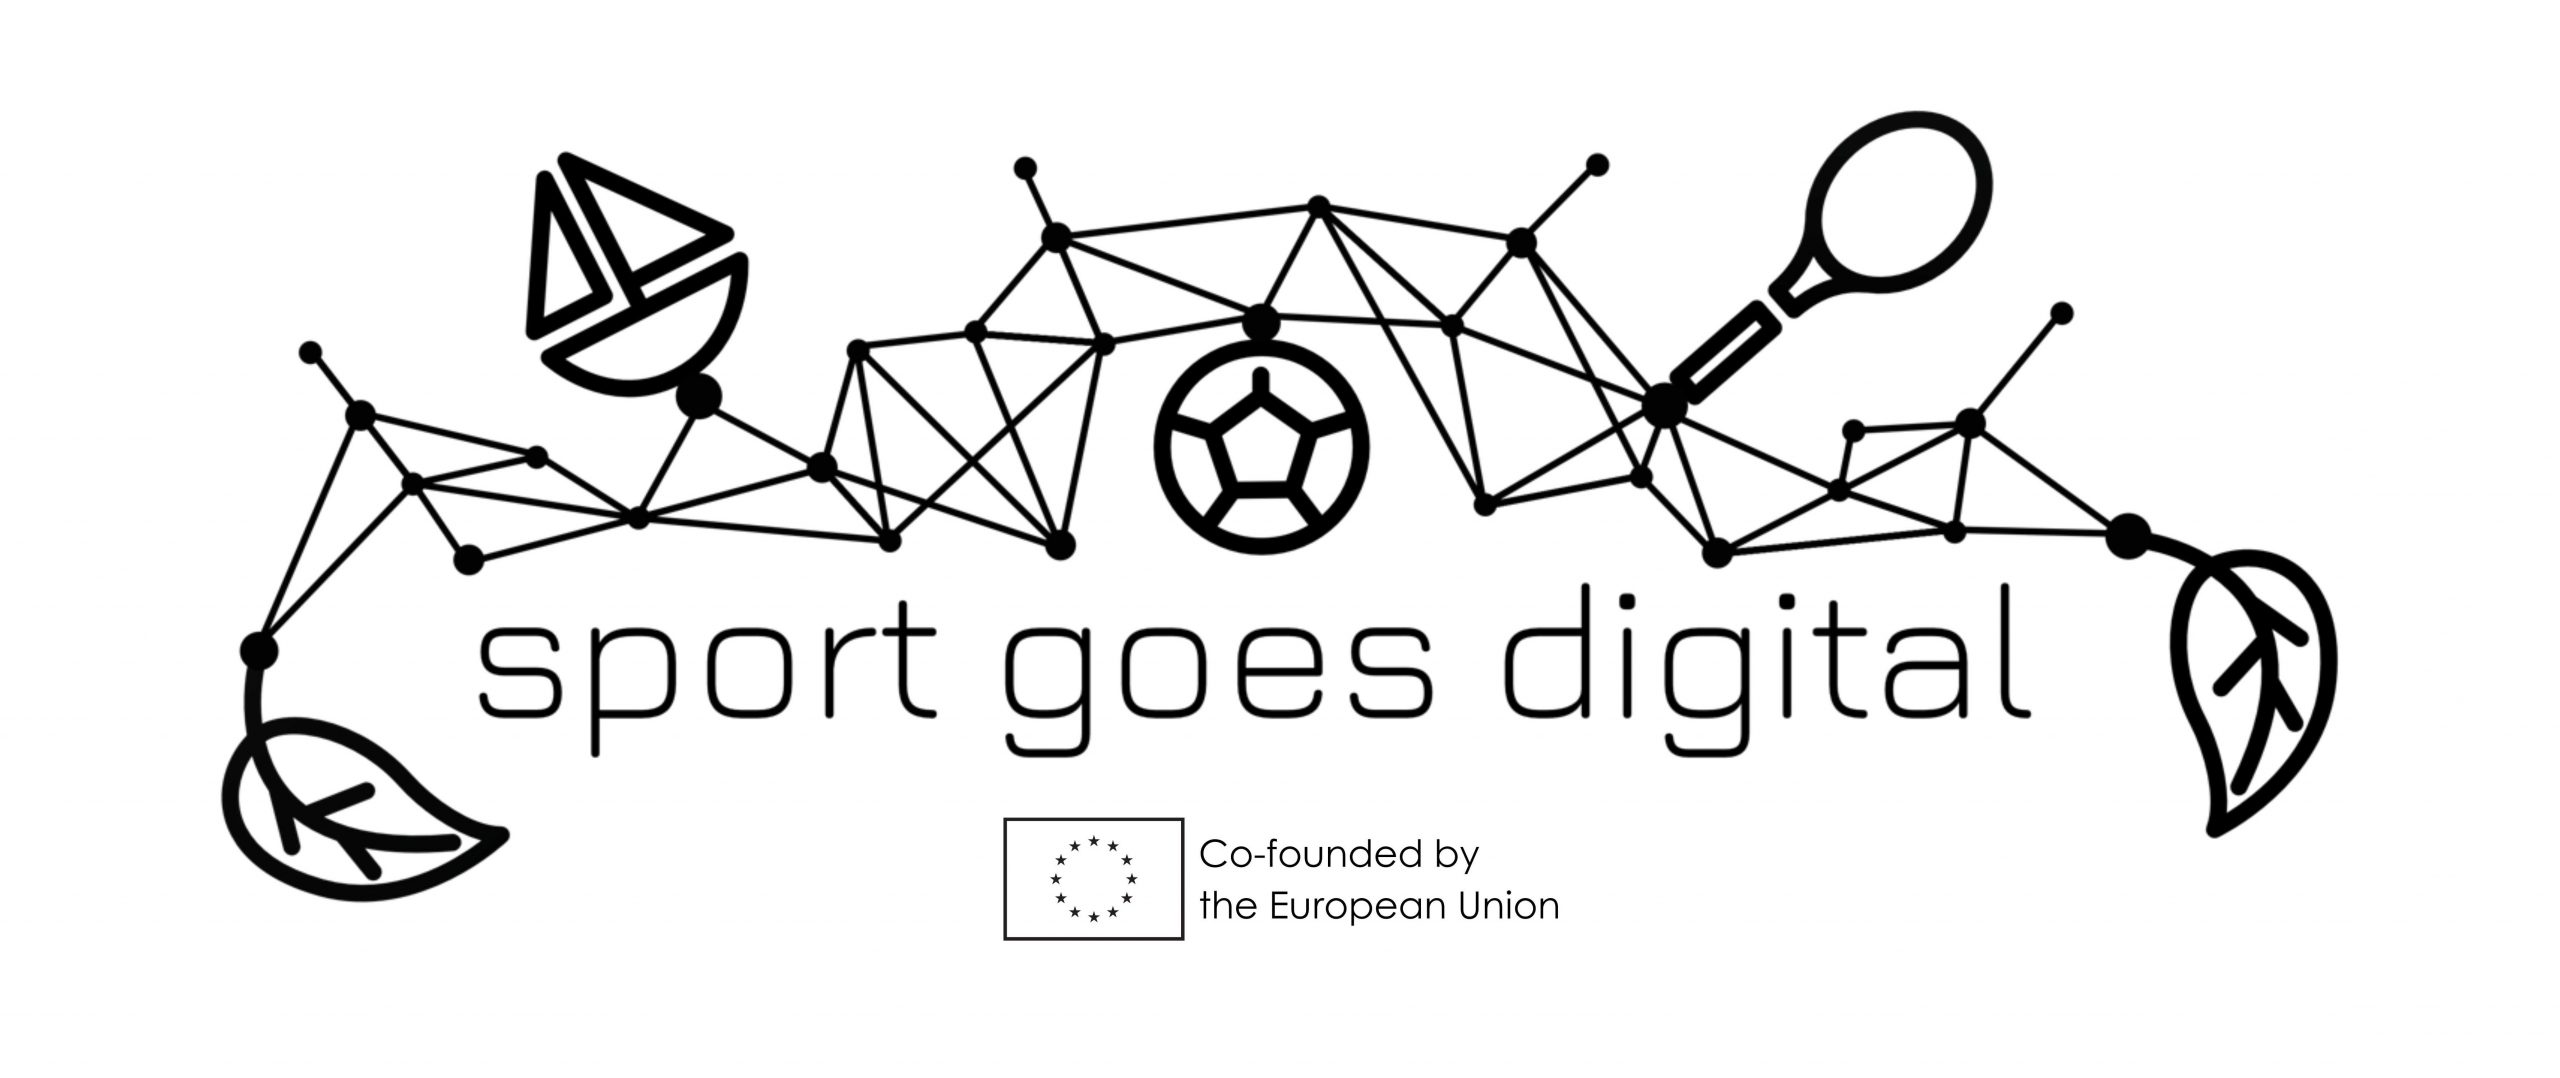 Sport goes digital